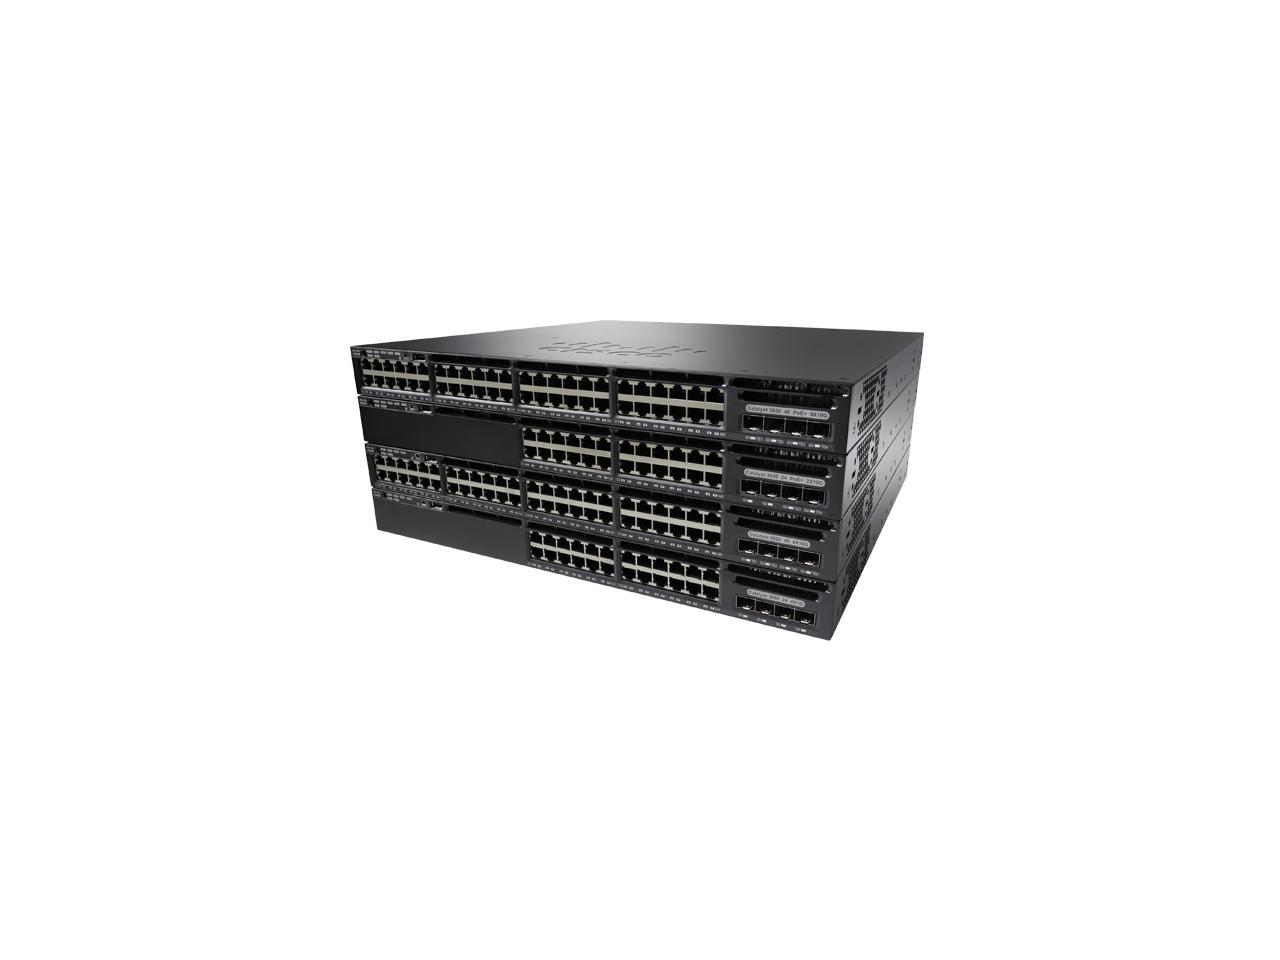 Cisco 24 port Catalyst Layer 3 Switch Model WS-C3650-24TS-S